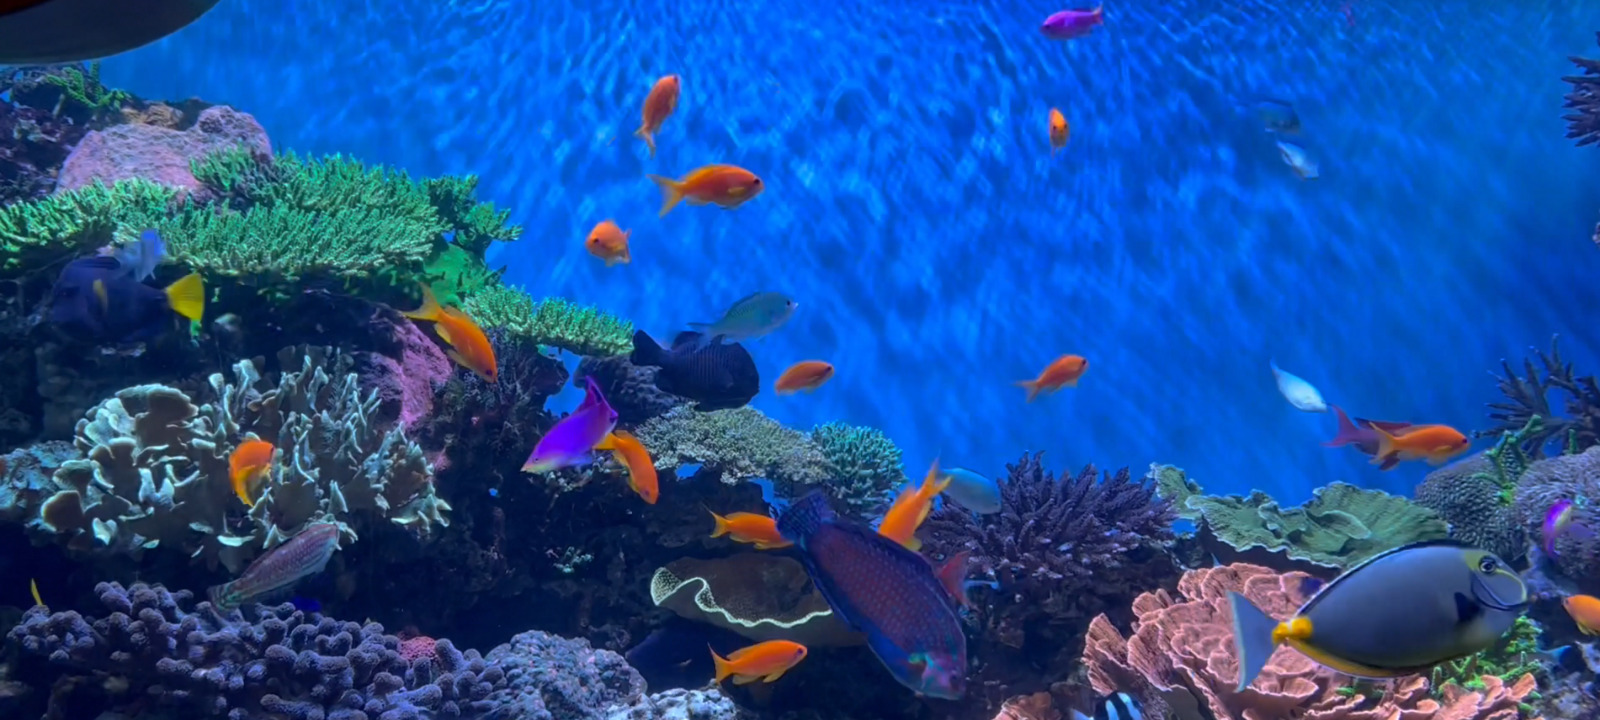 Calm And Relaxing Peaceful Video Screen Saver Fish Tank Aquarium PC Computer